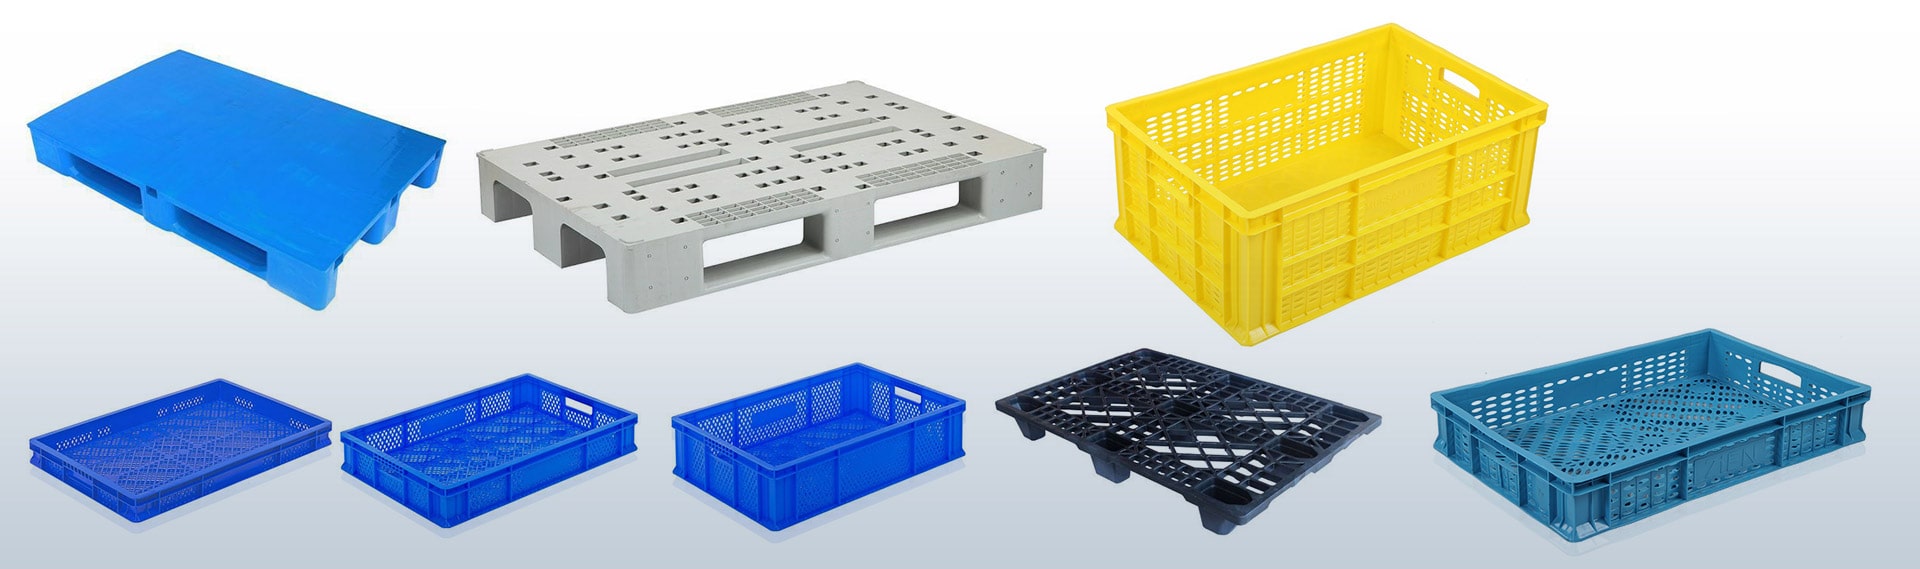 Euroboxes Plastic Bin Manufacturer